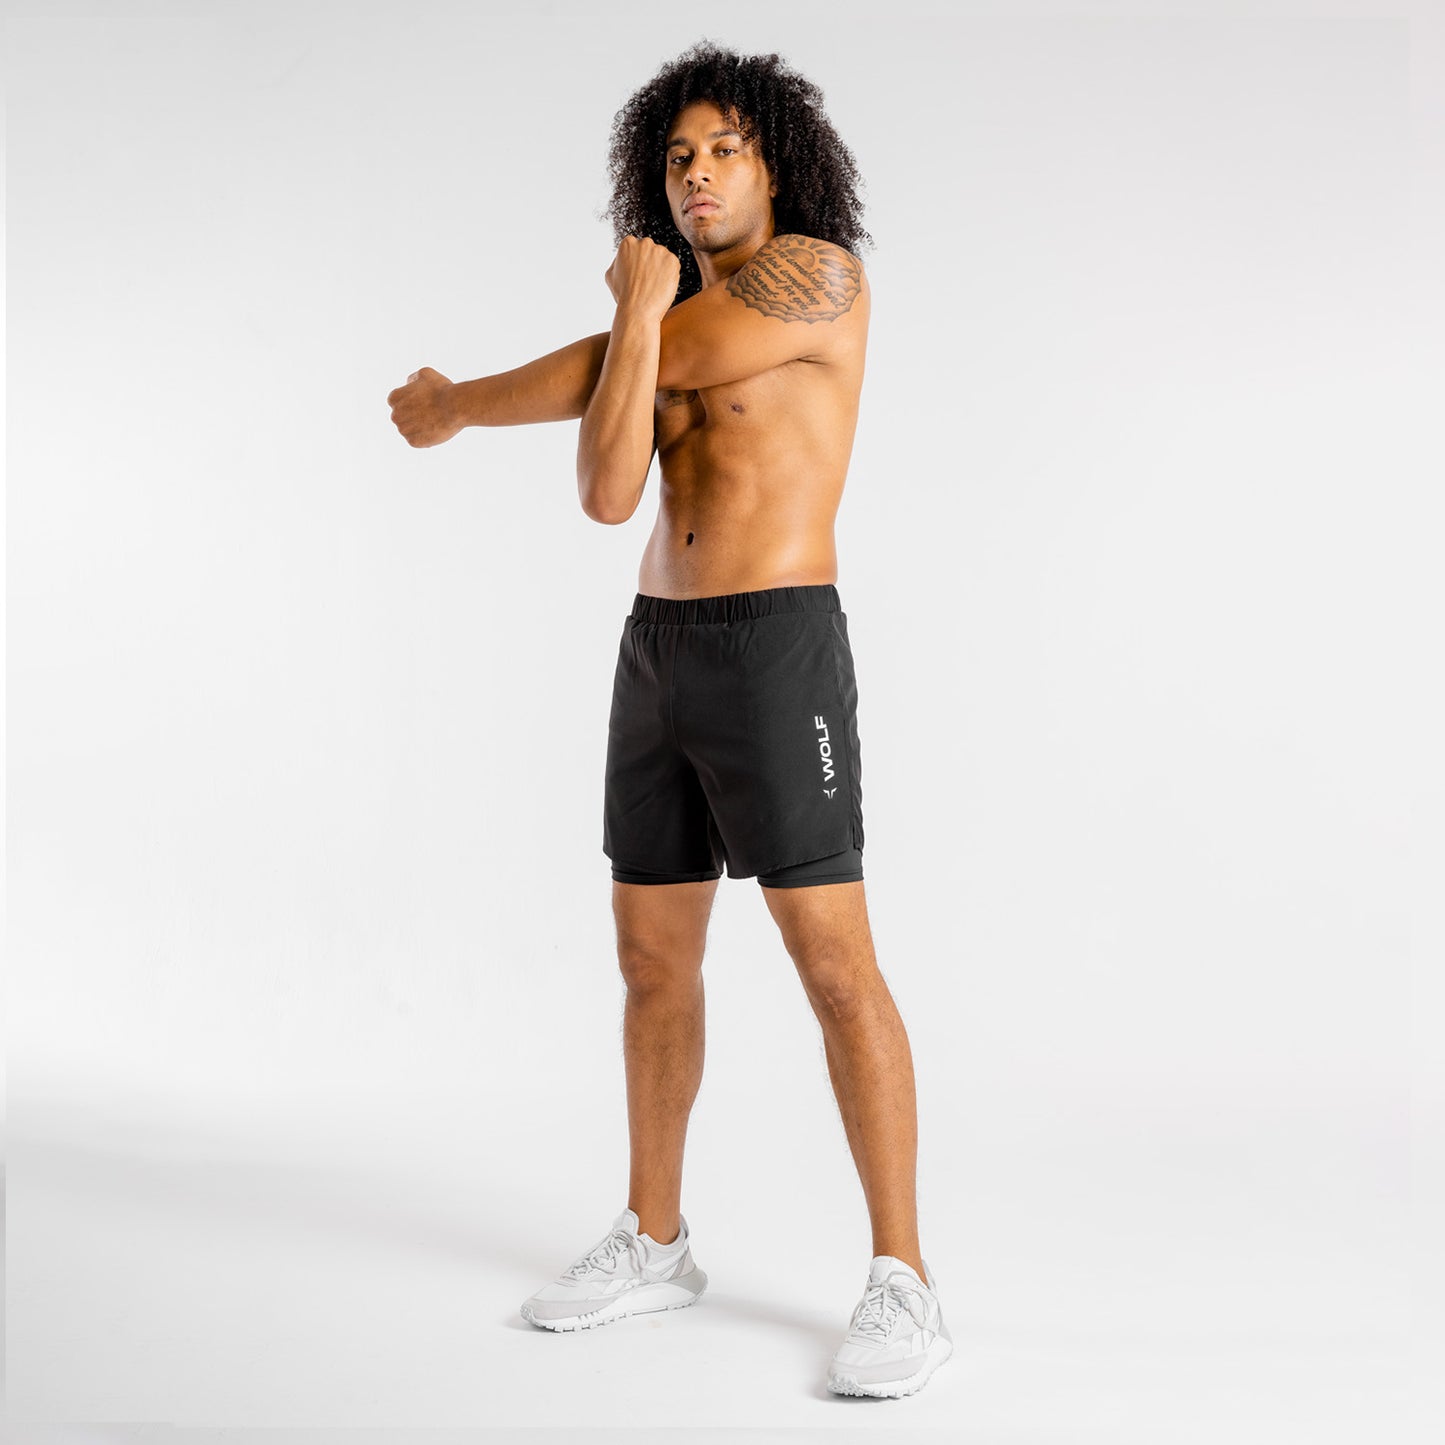 squatwolf-gym-wear-primal-shorts-2-in-1-black-workout-shorts-for-men